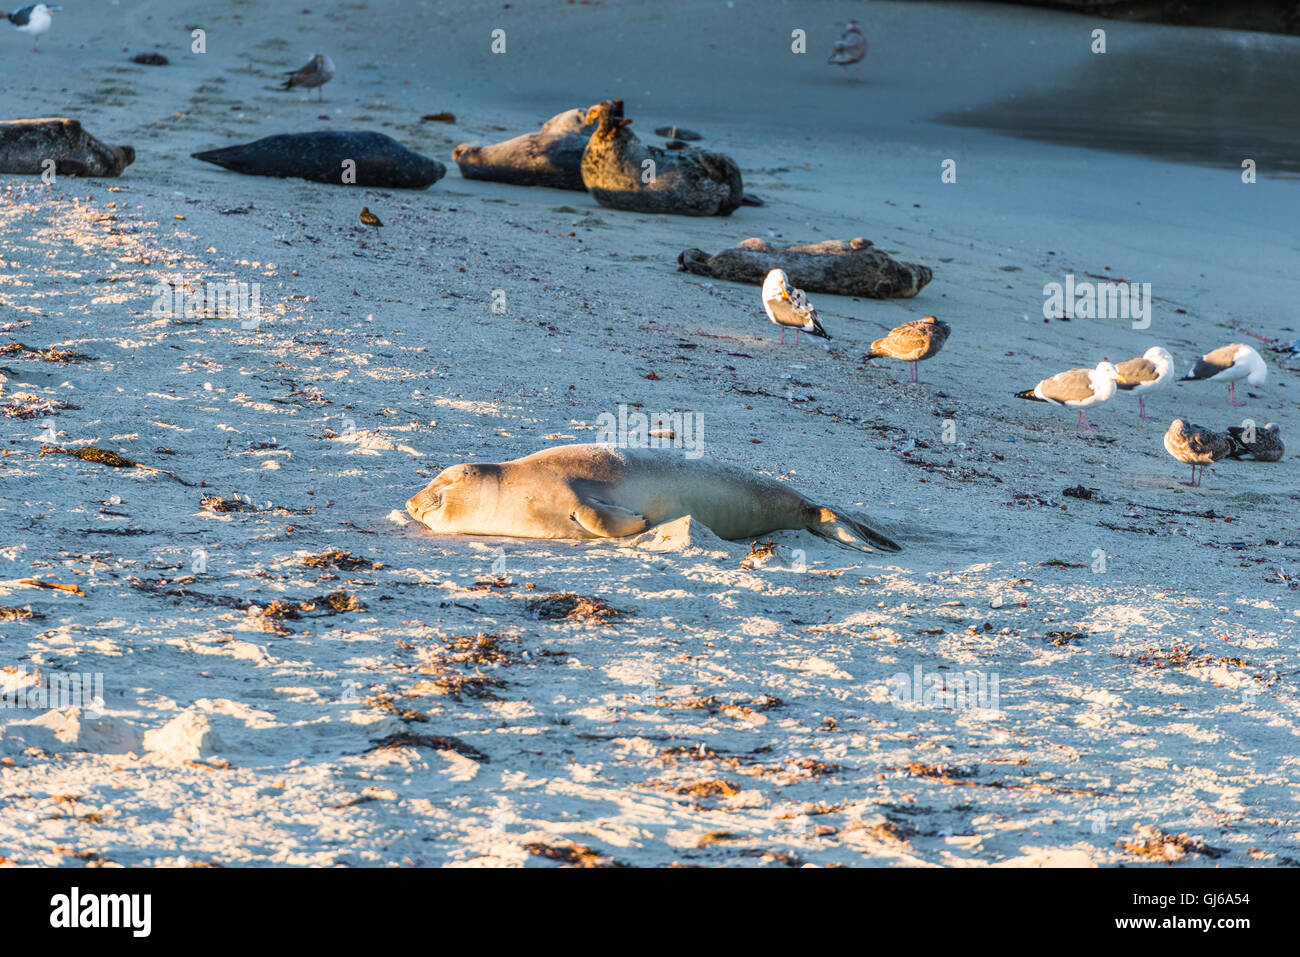 Grey seal, also known as the Atlantic seal. Wild life animal. Stock Photo